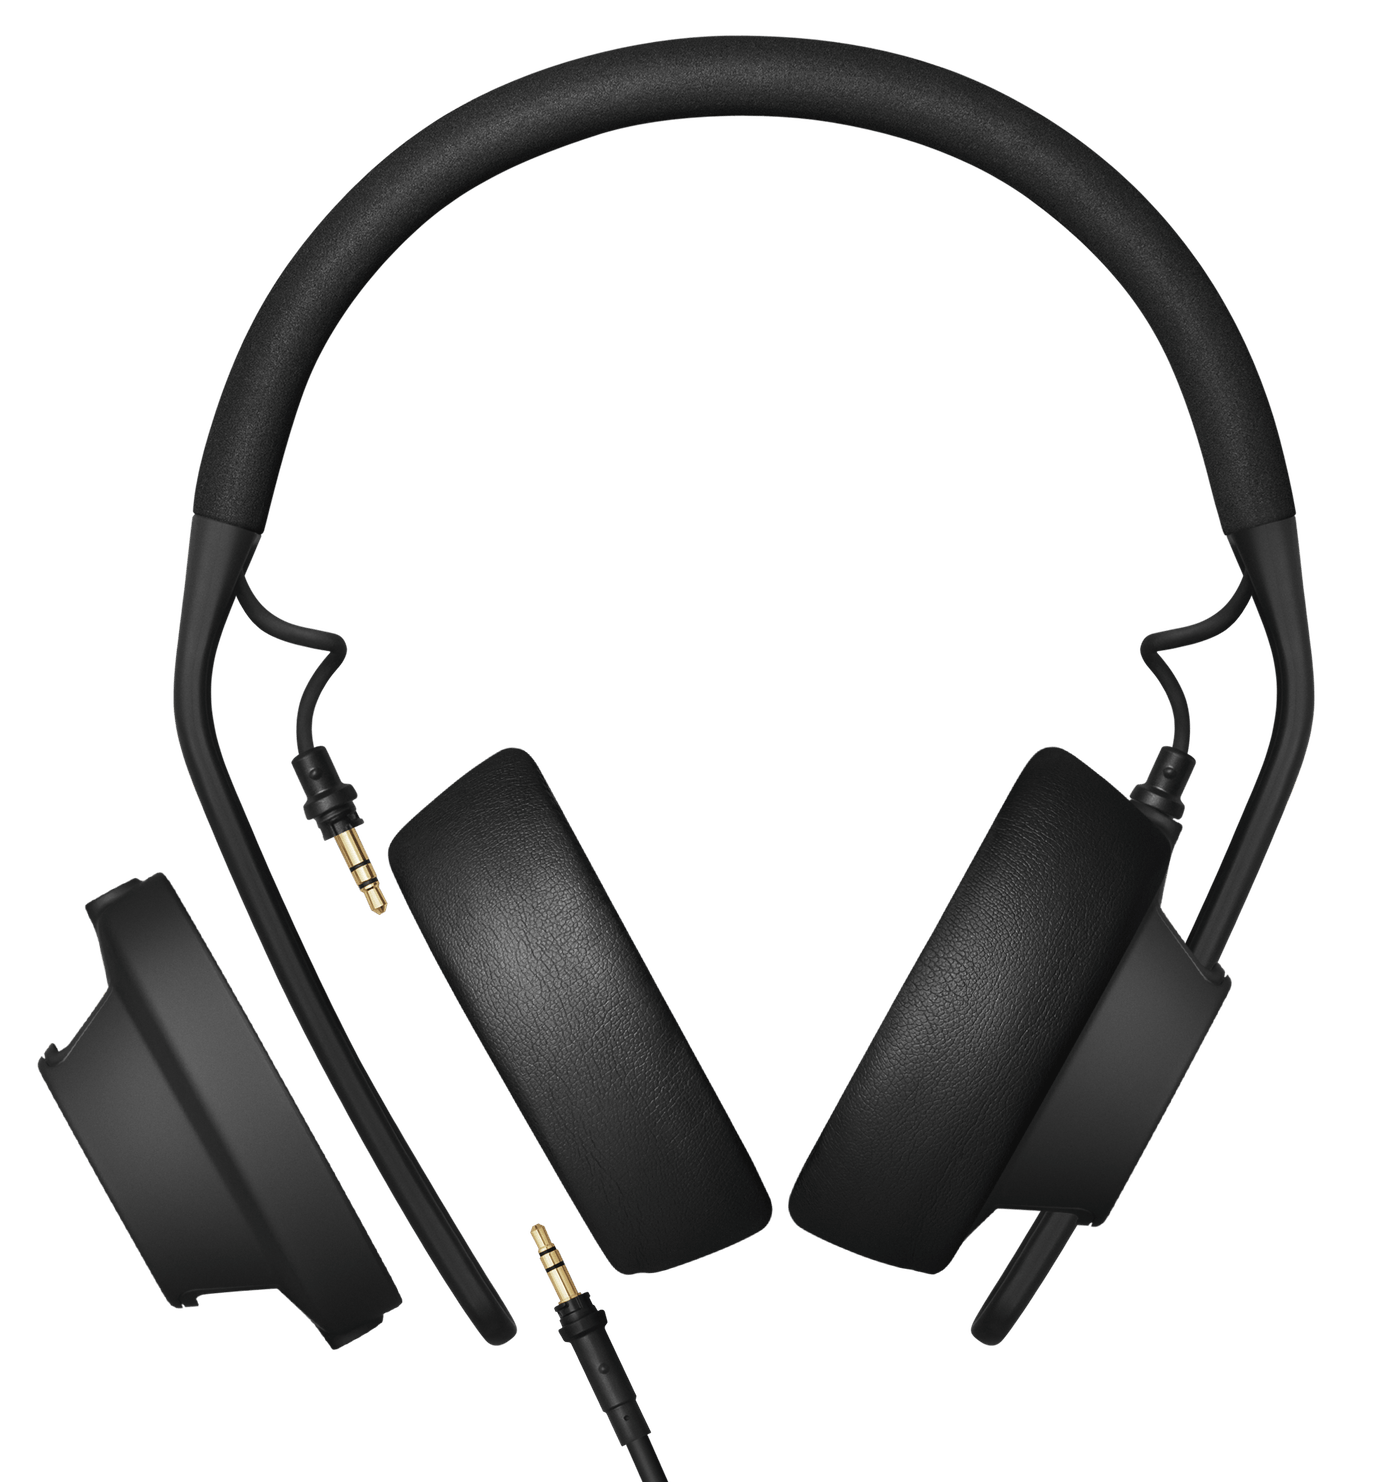 AIAIAI’s TMA-2 Studio XE headphones also include modular components